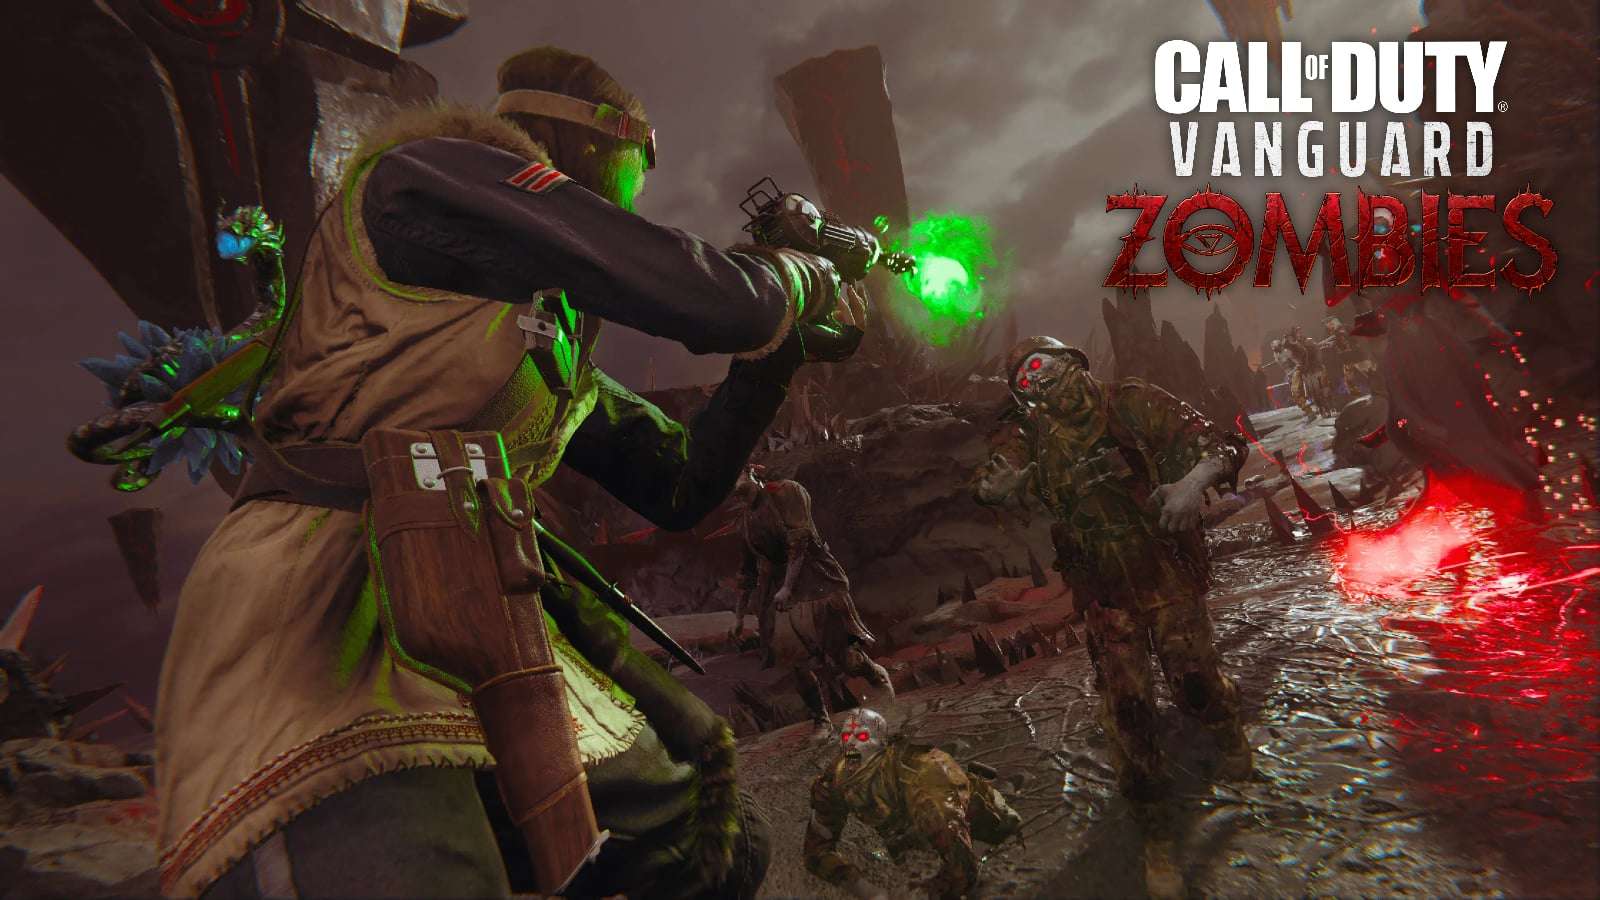 Zombies Ray gun addition